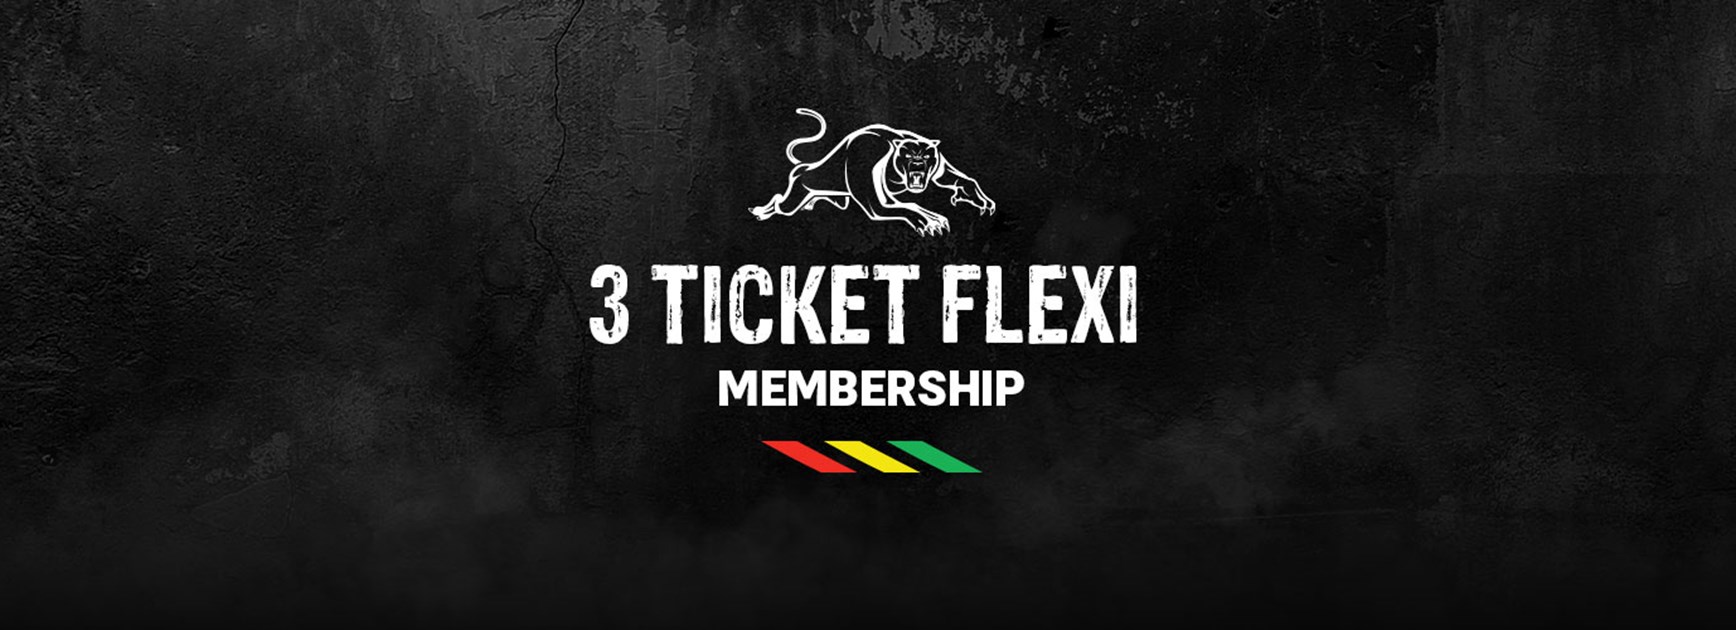 3 Ticket Flexi Membership